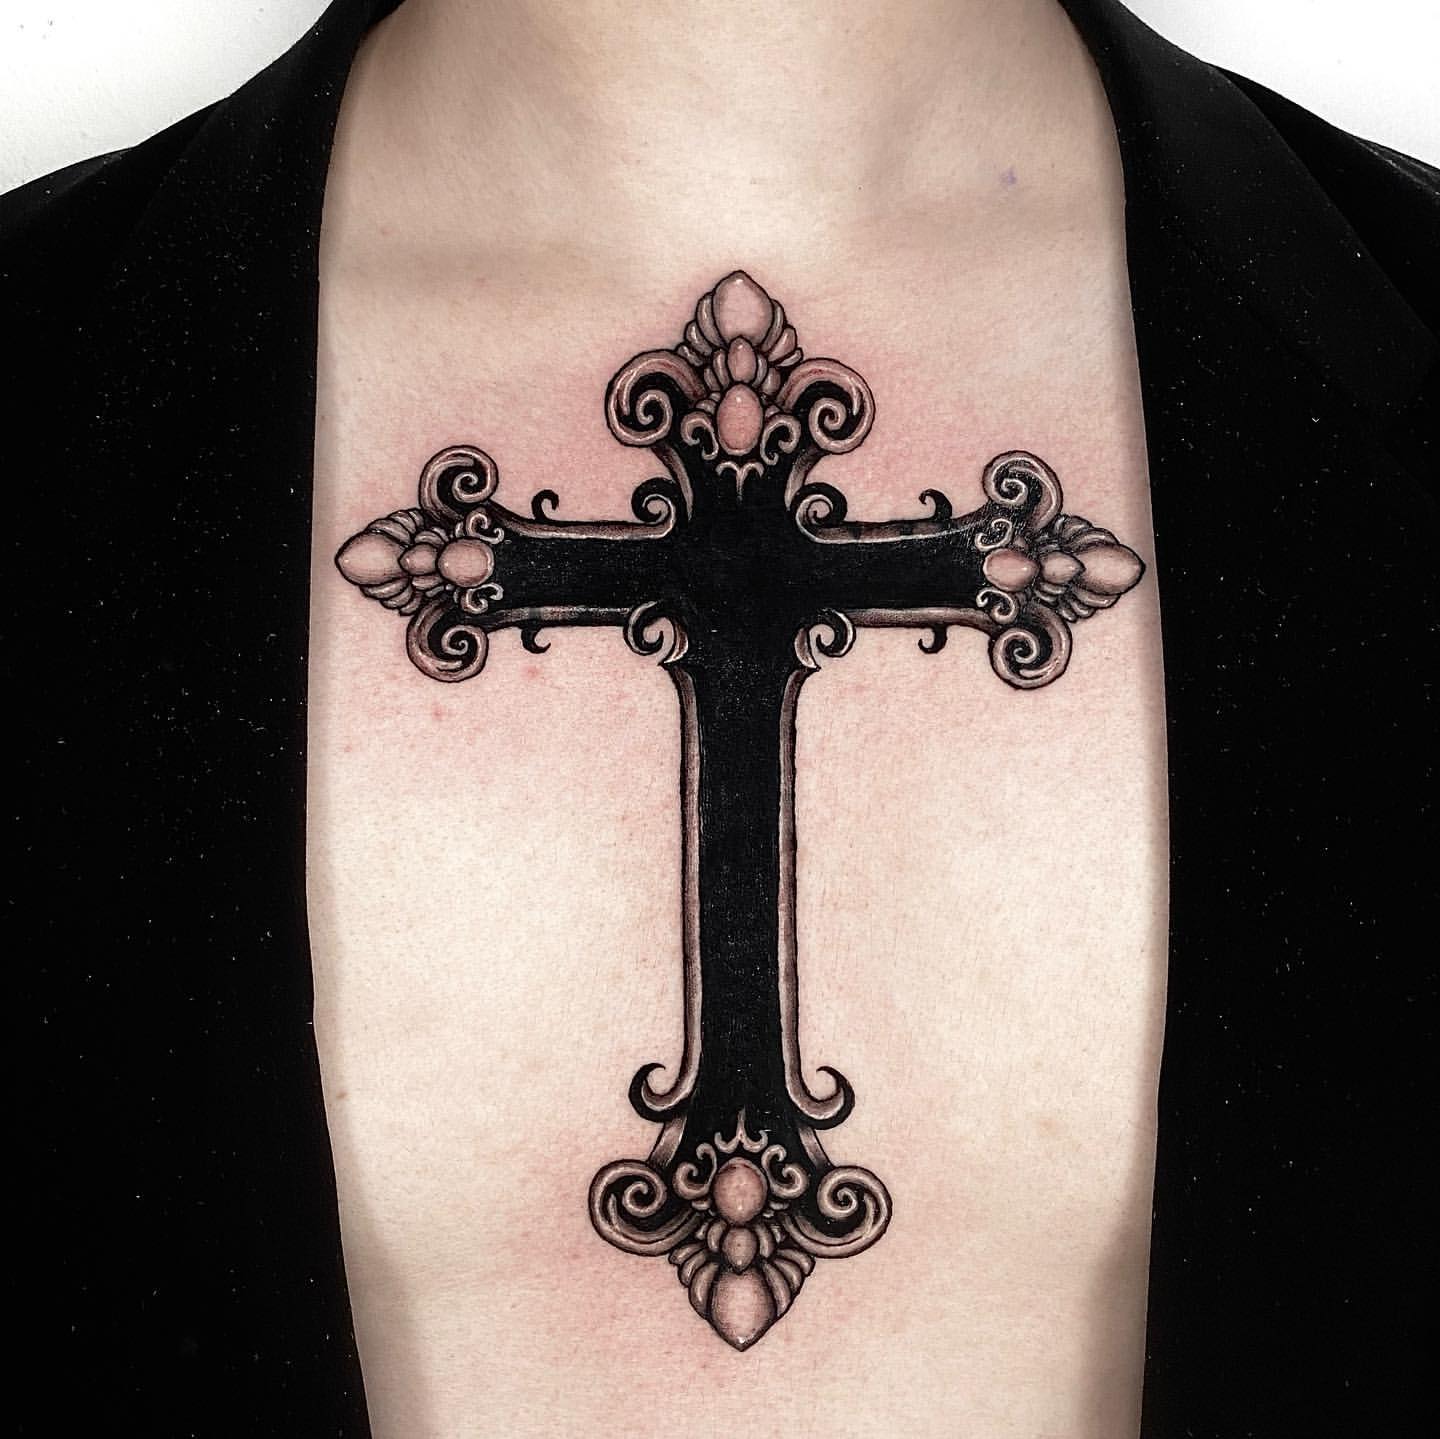 Cross Temporary Body Tattoo Stickers Black Crosses + Writing Star of David  - 029 | eBay